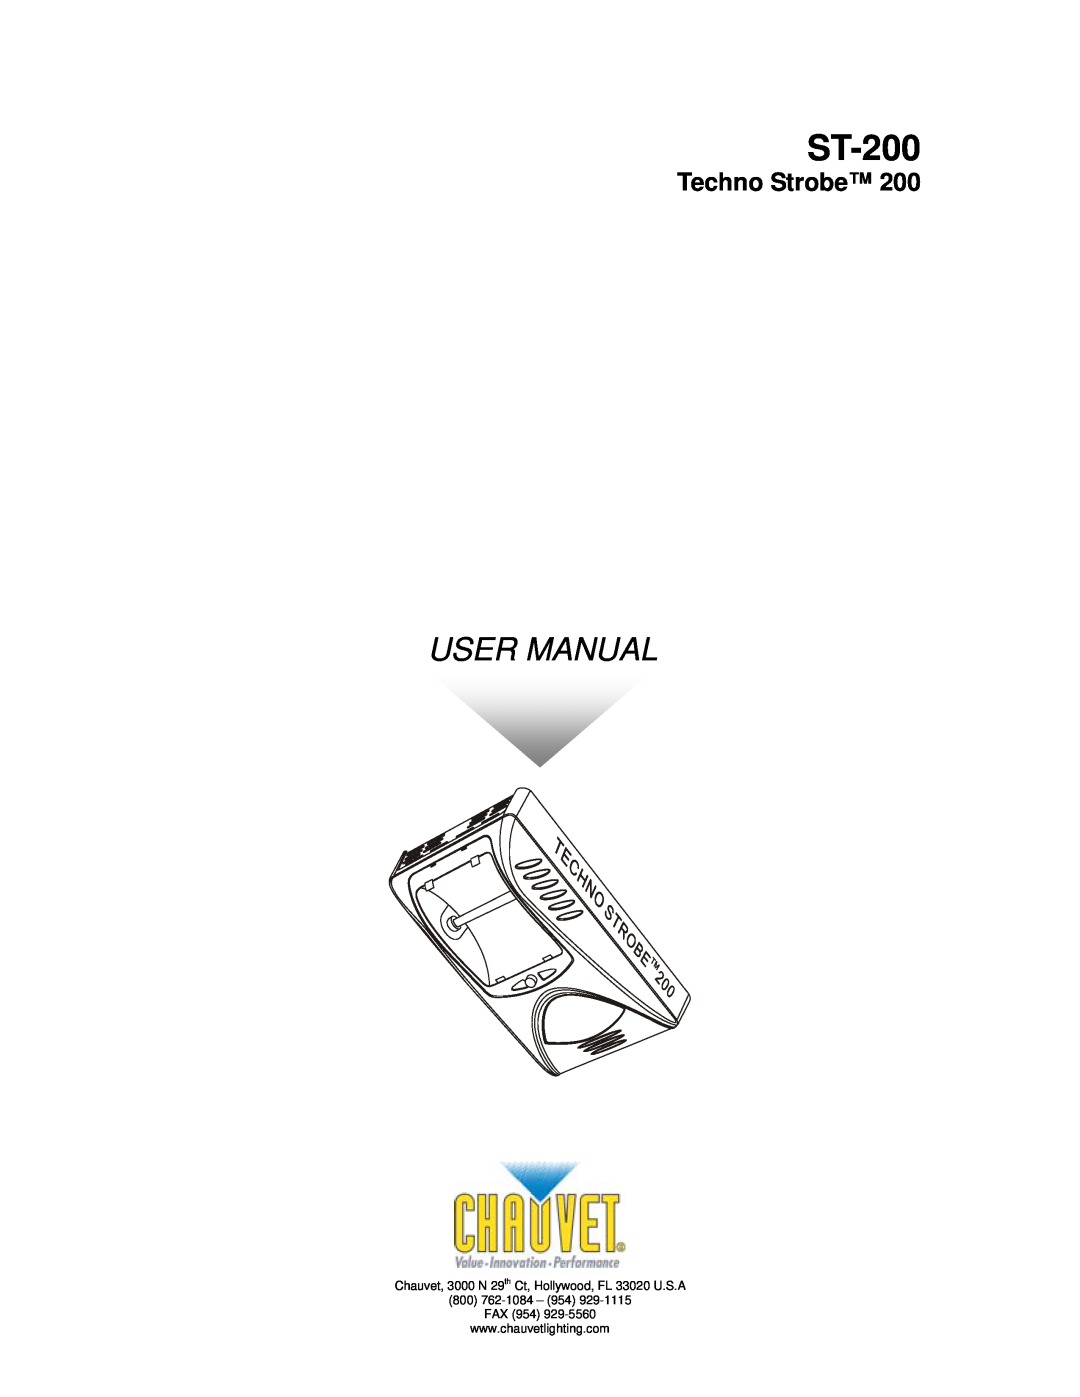 Chauvet Model ST-200 user manual User Manual, Techno Strobe, Chauvet, 3000 N 29th Ct, Hollywood, FL 33020 U.S.A 